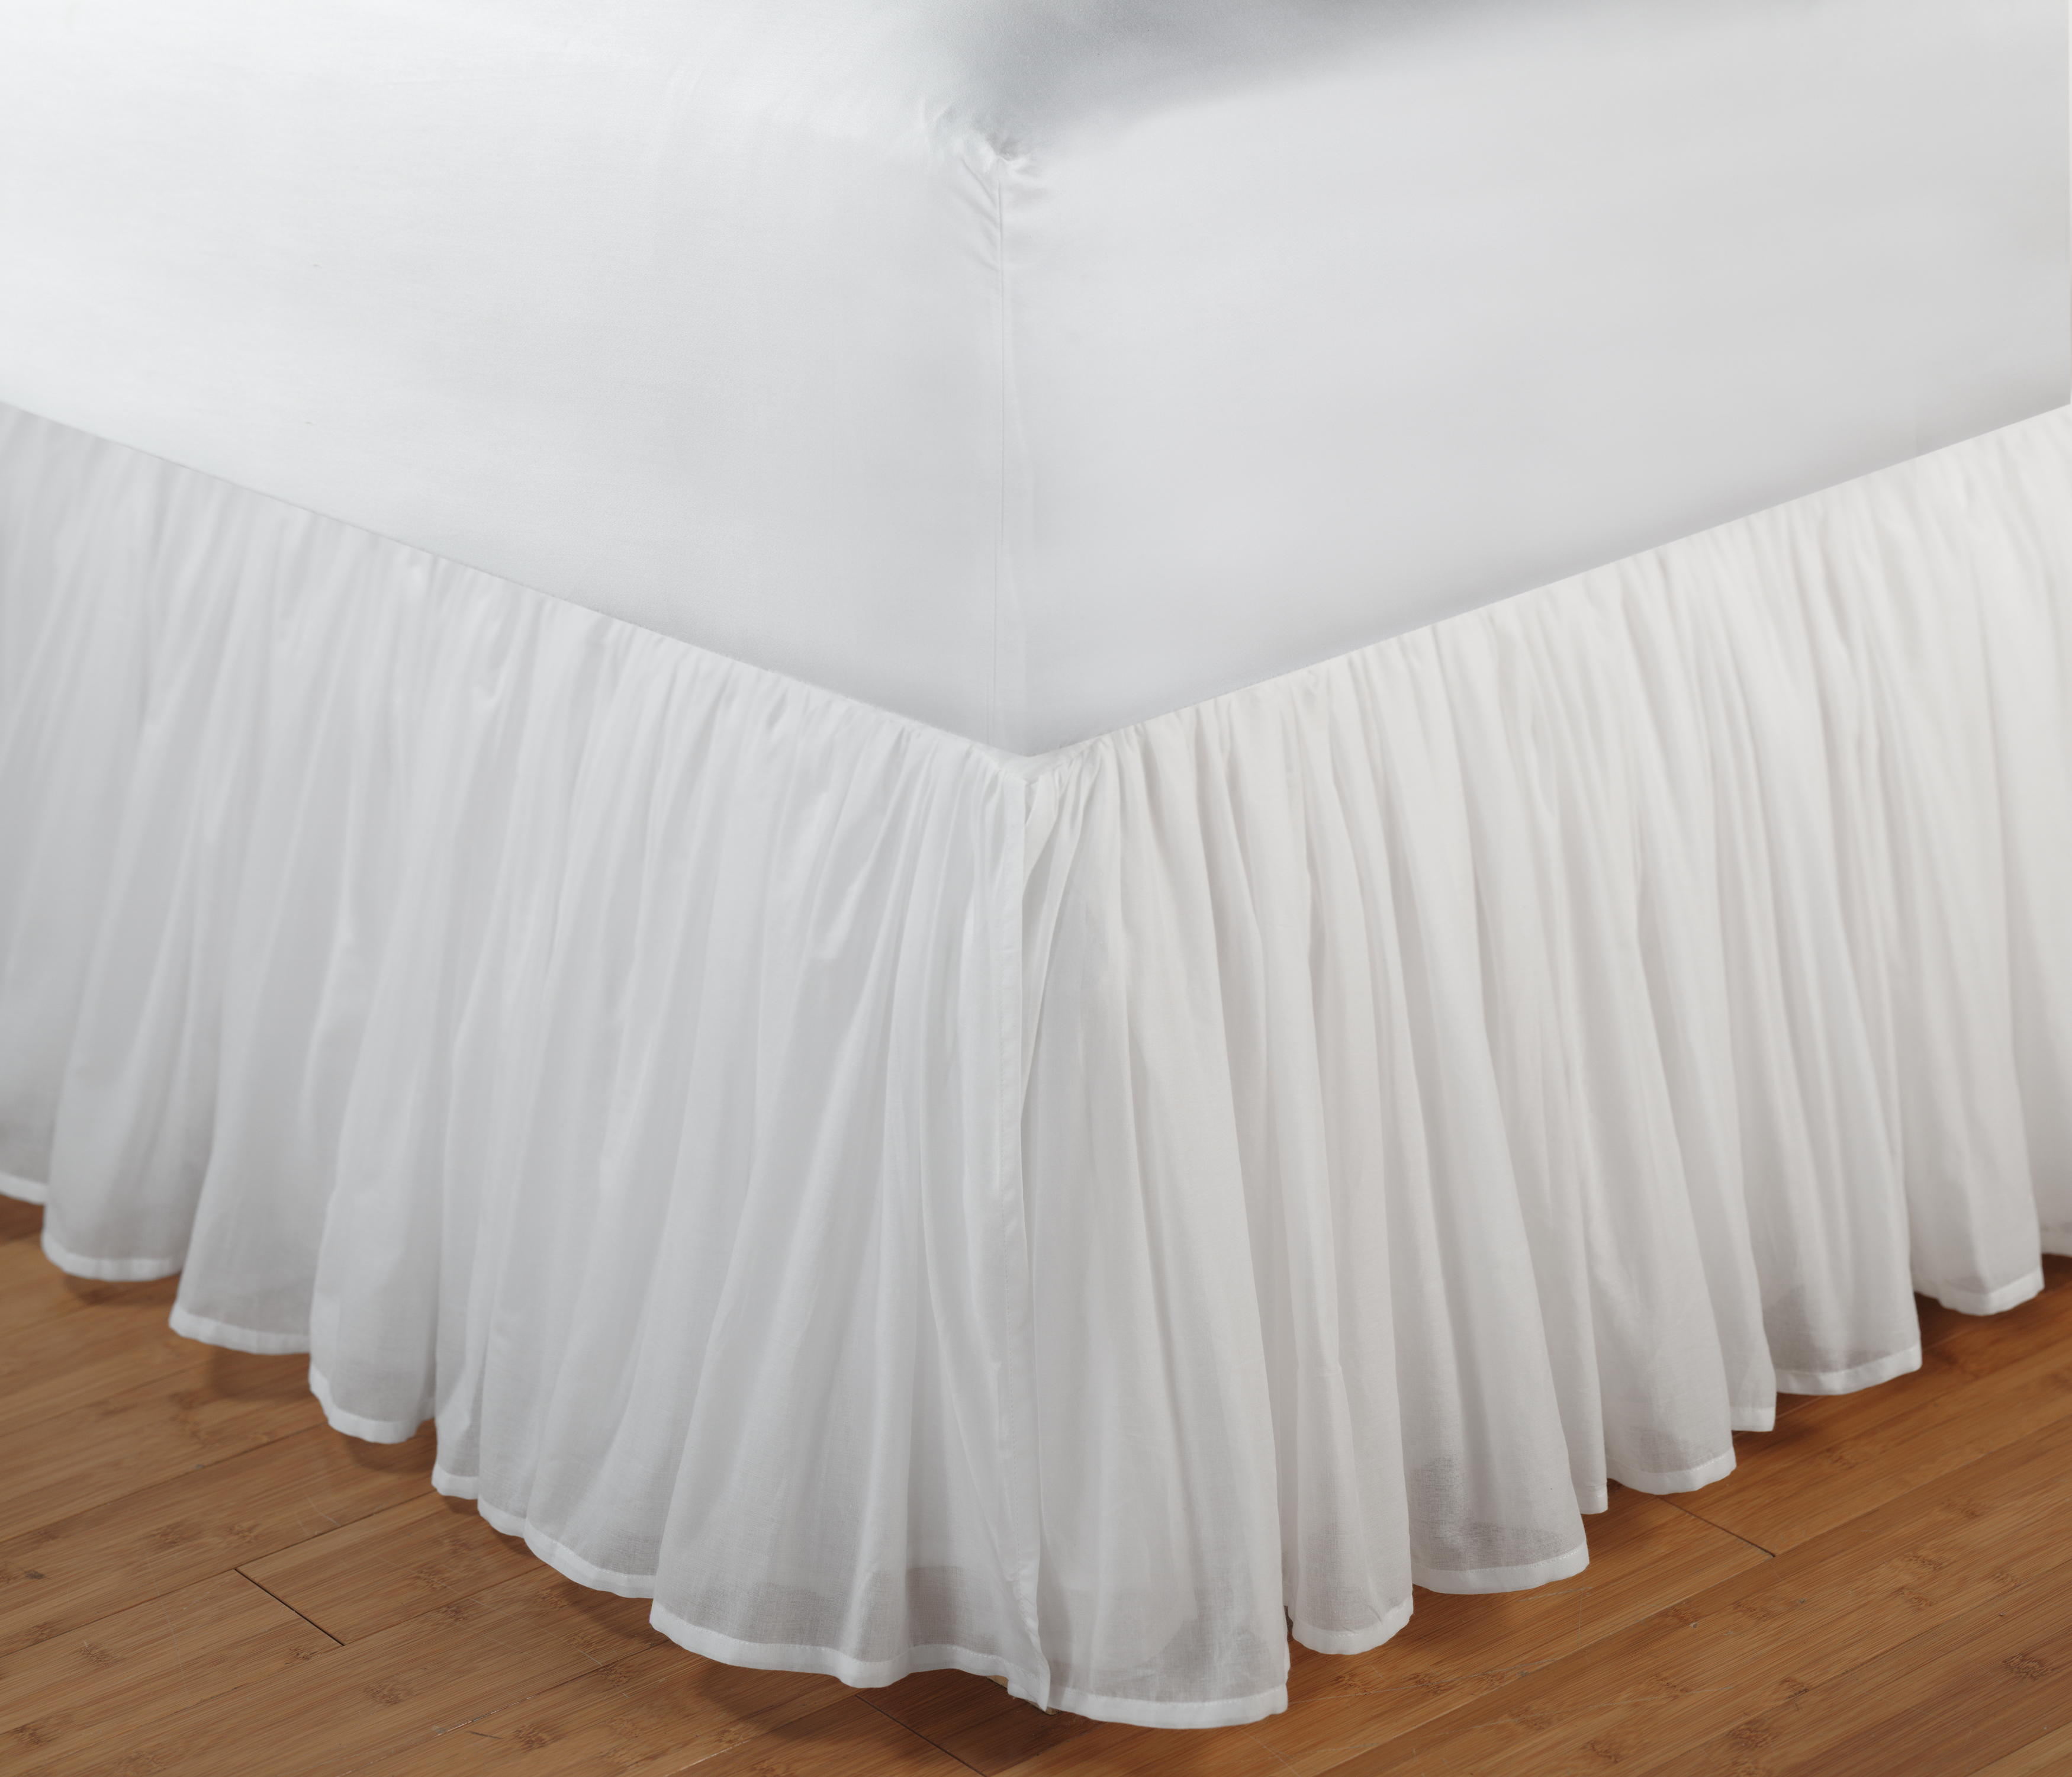 Greenland Home Fashions Cotton VoileWhiteBed Skirt 15Queen, White